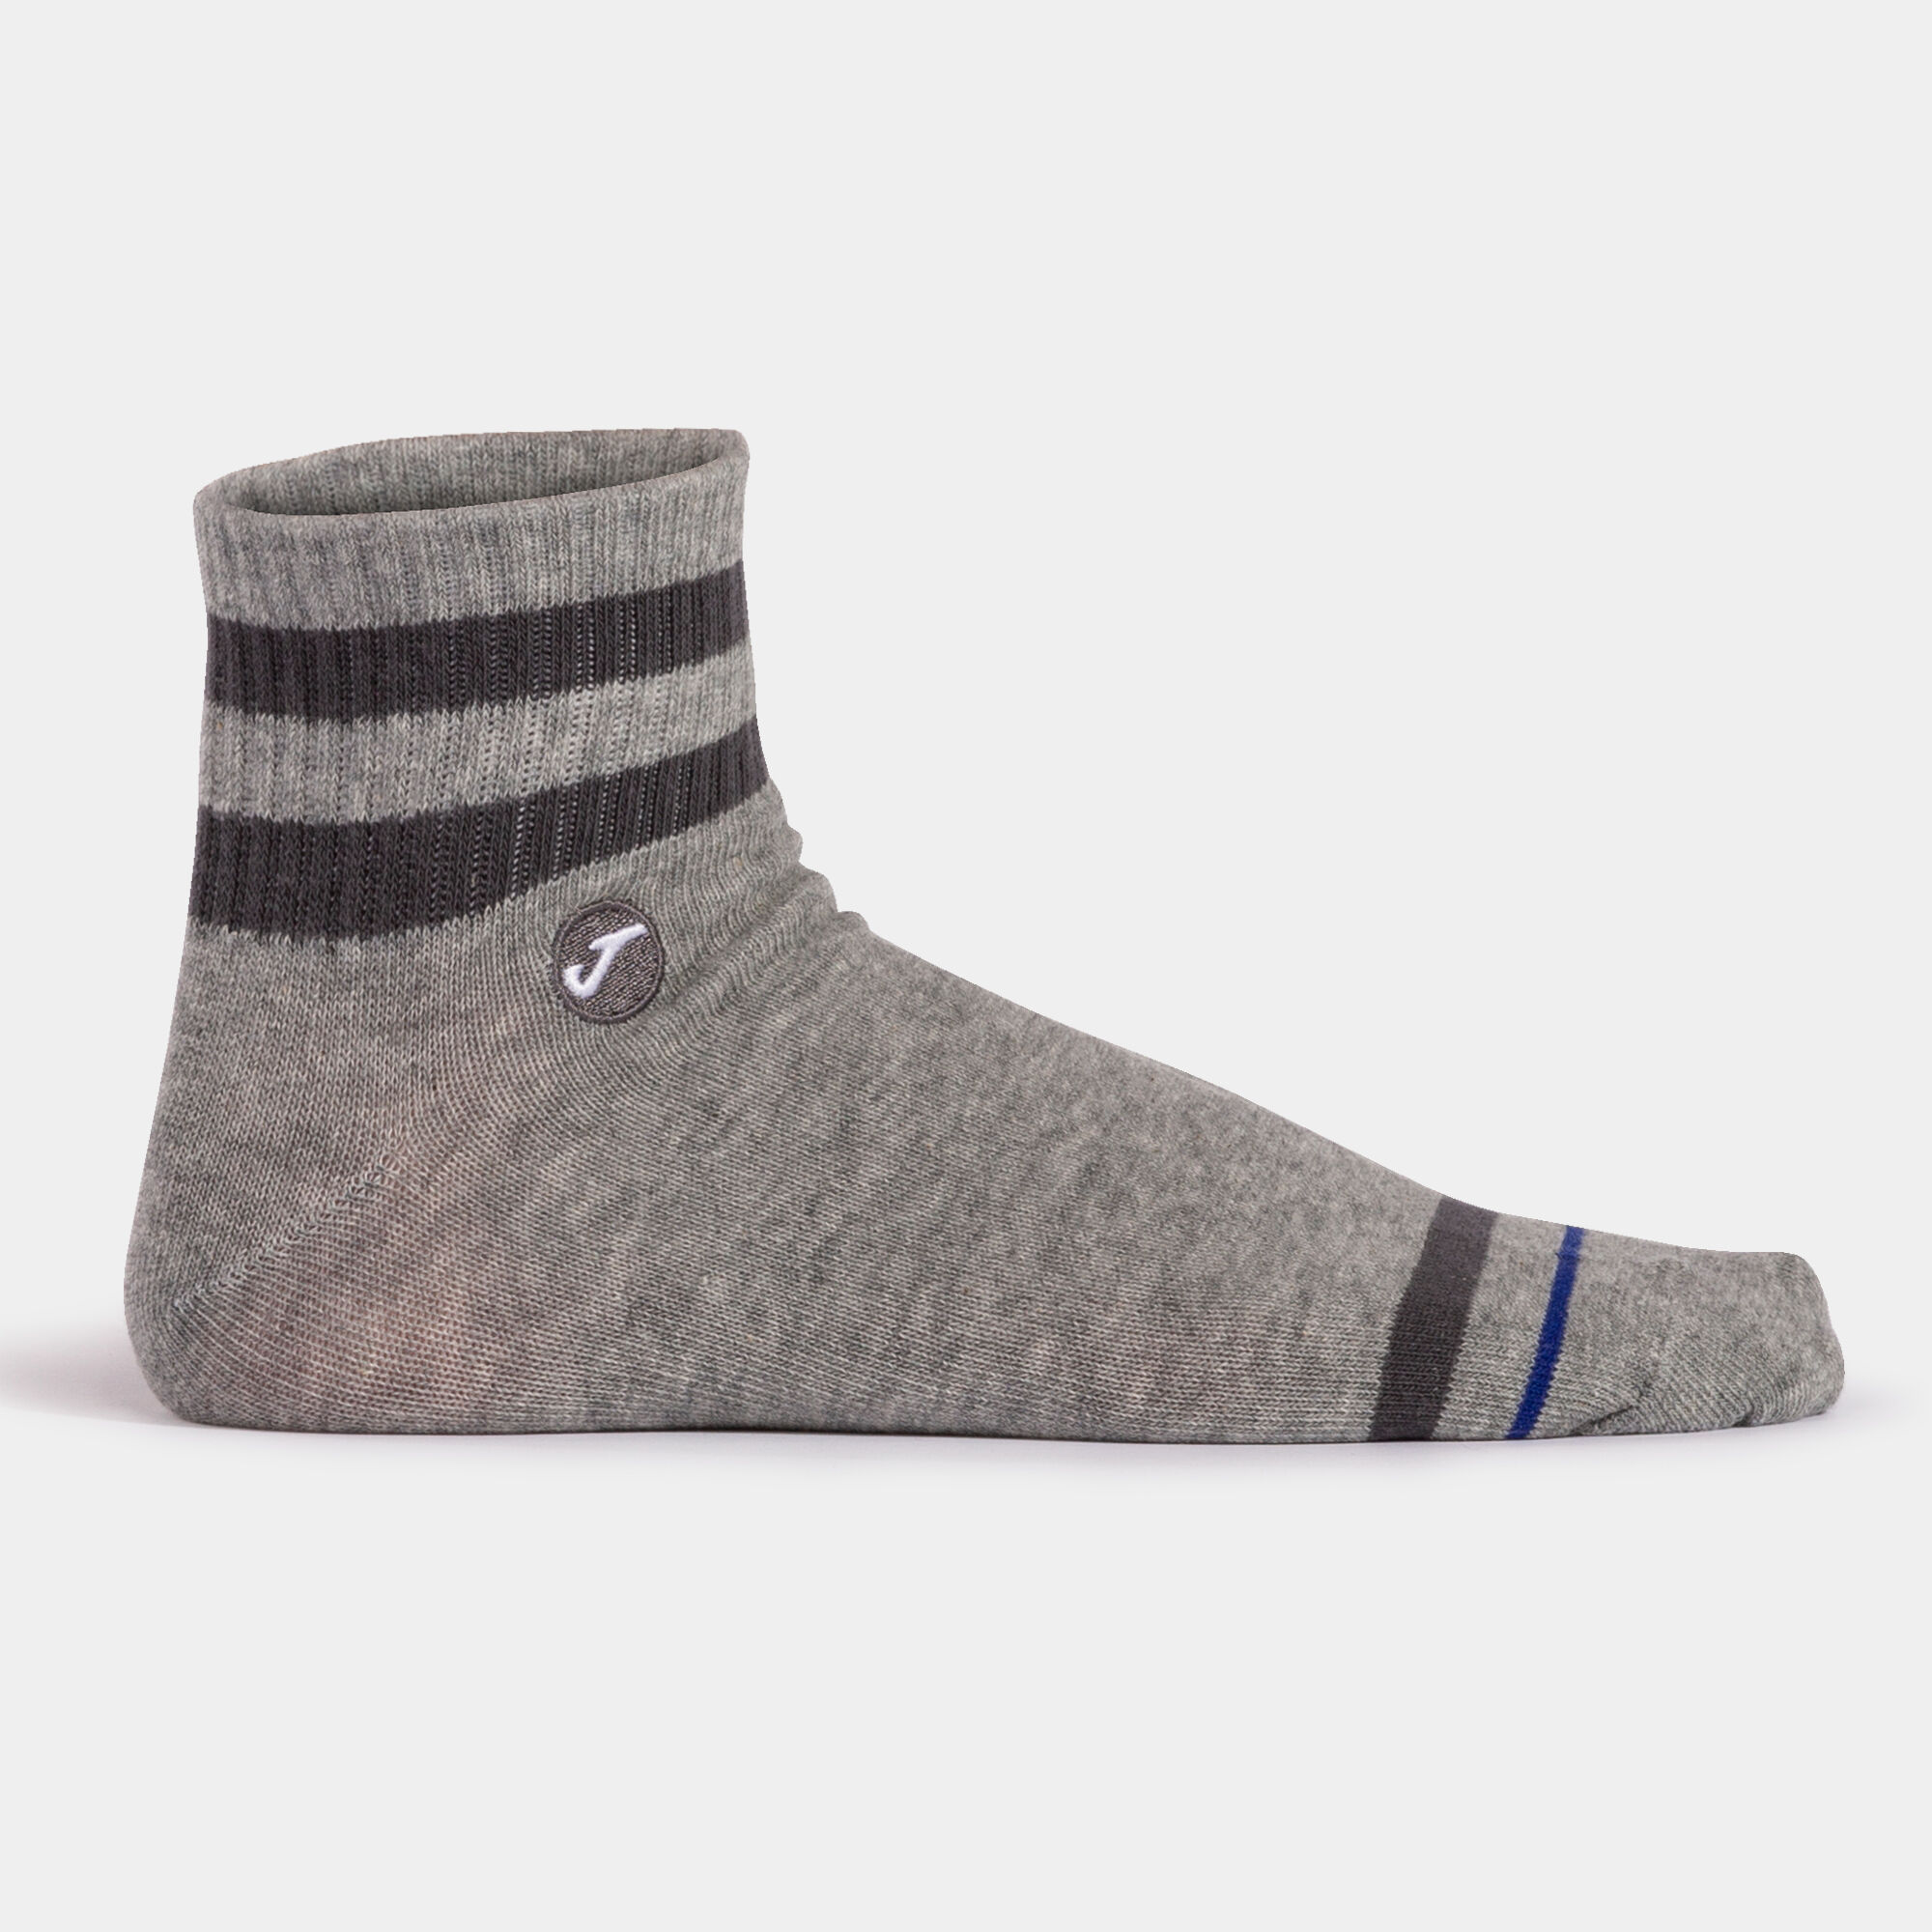 Socks woman Stripe white melange gray